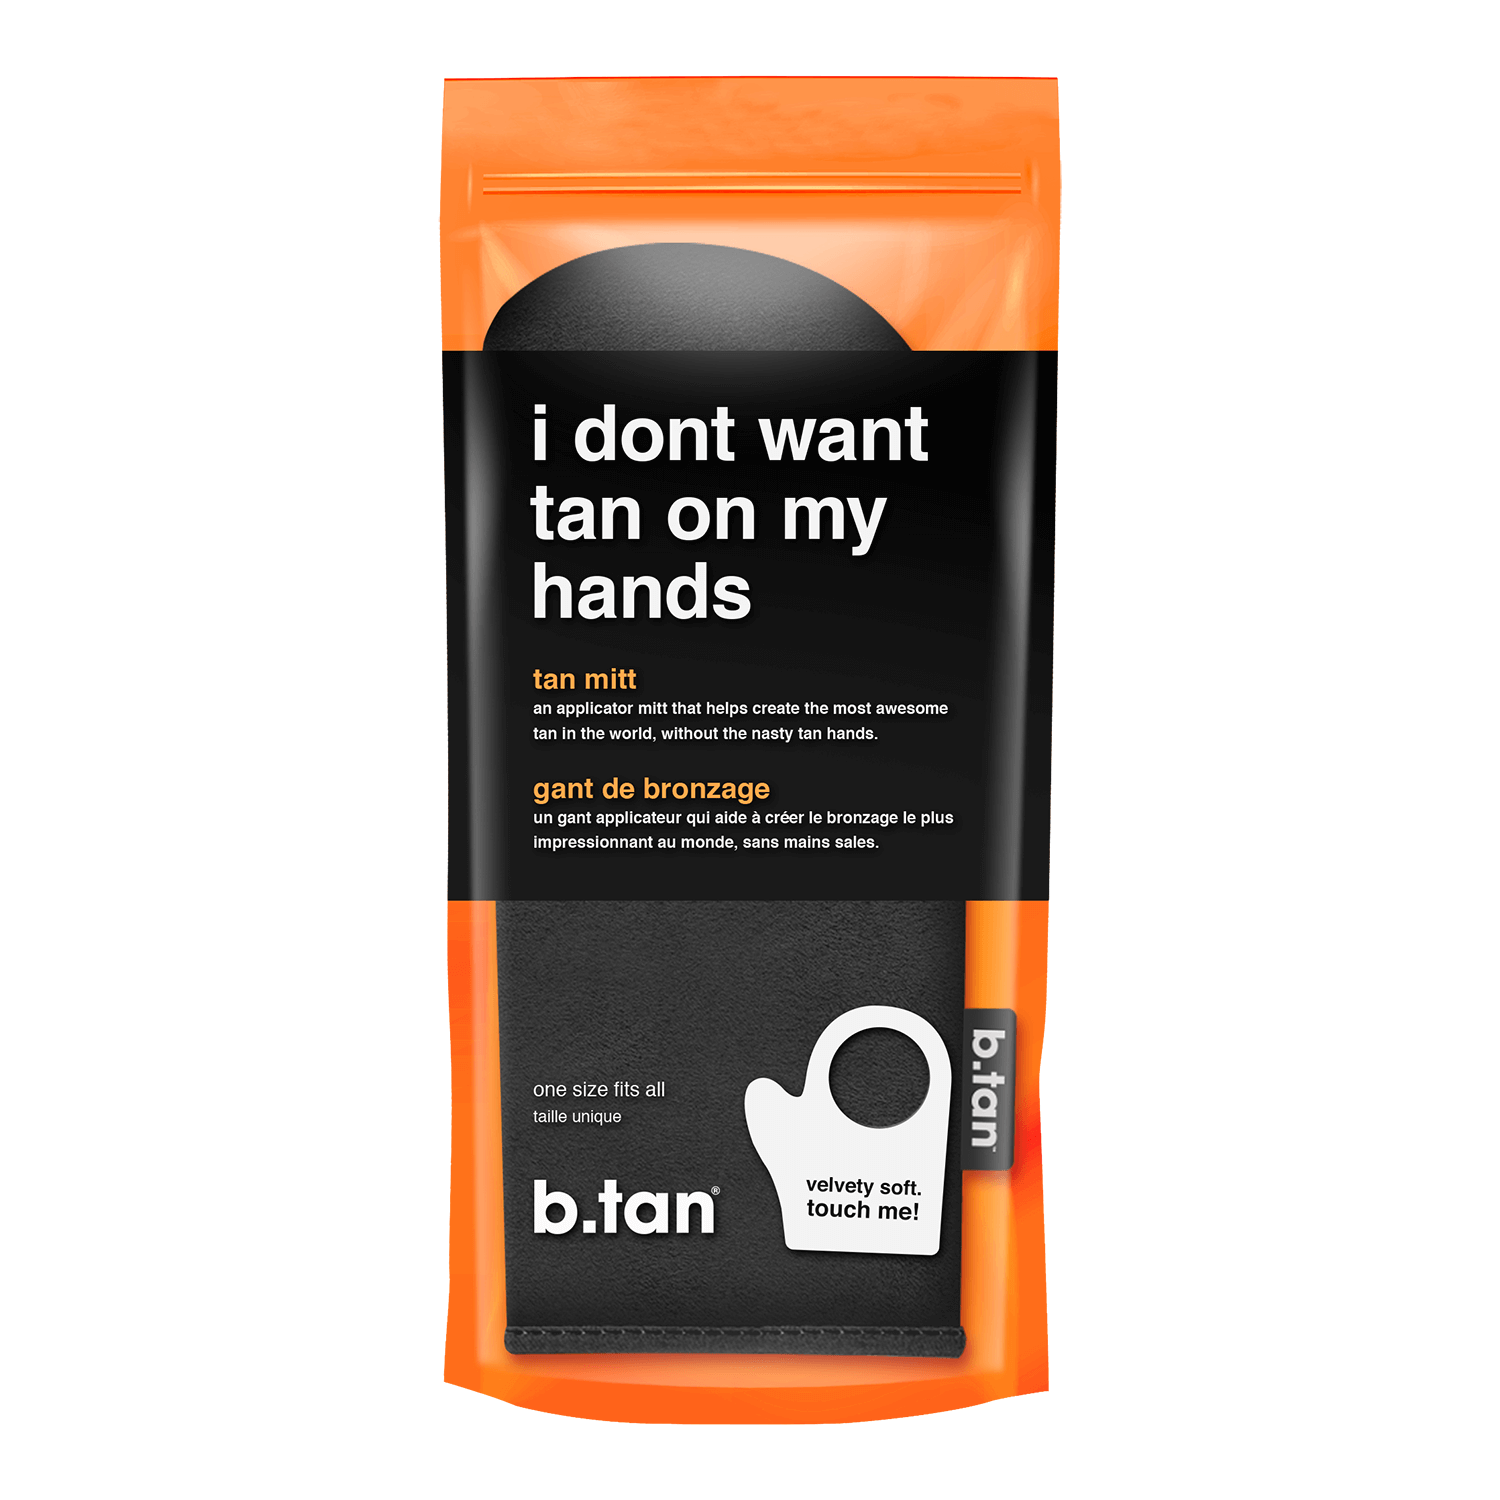 Gant de bronzage - I don't want tan on my hands